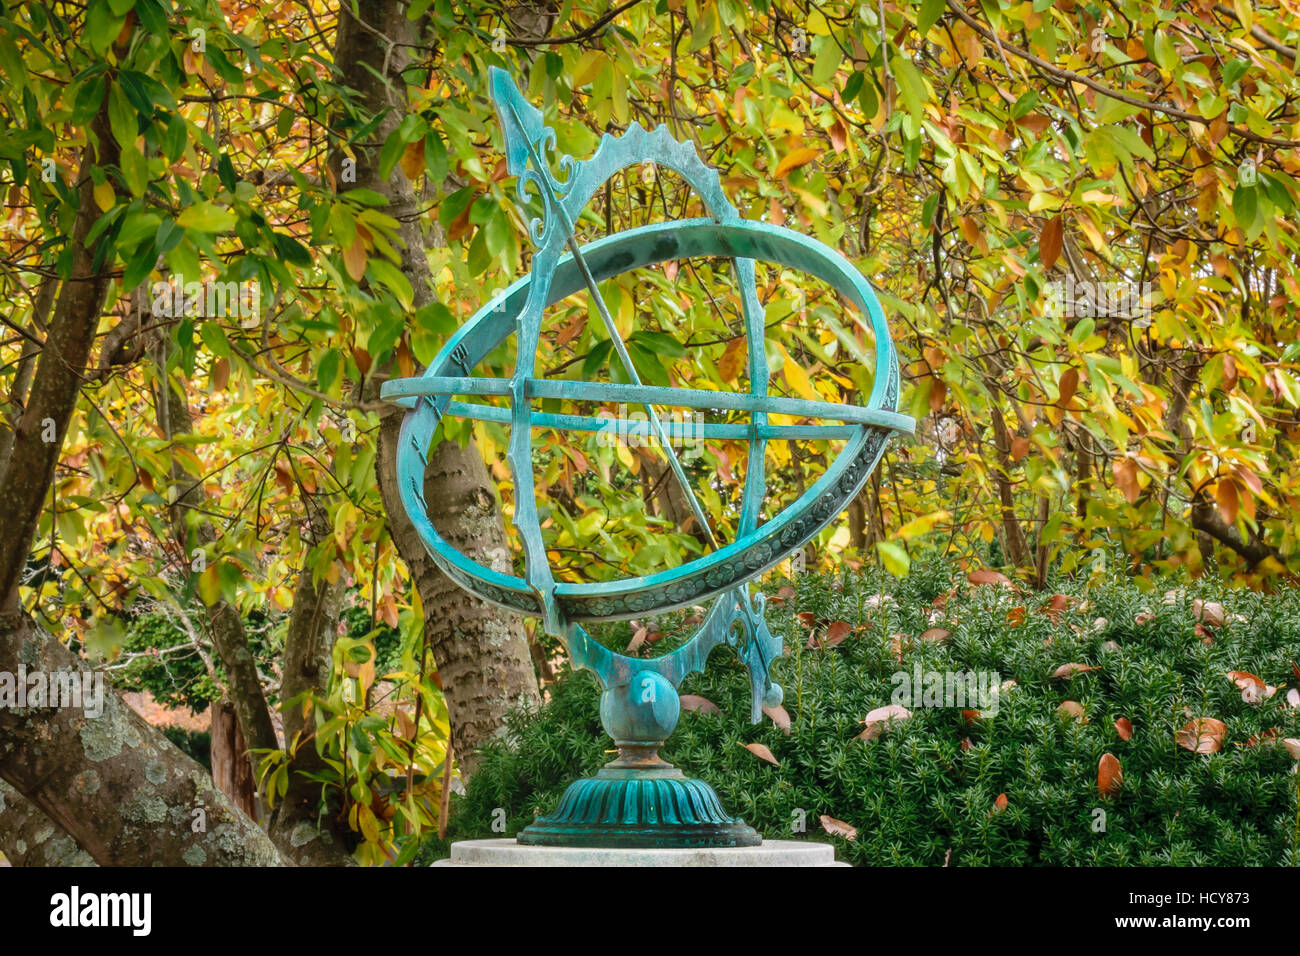 Spherical Sundial in a garden setting Stock Photo